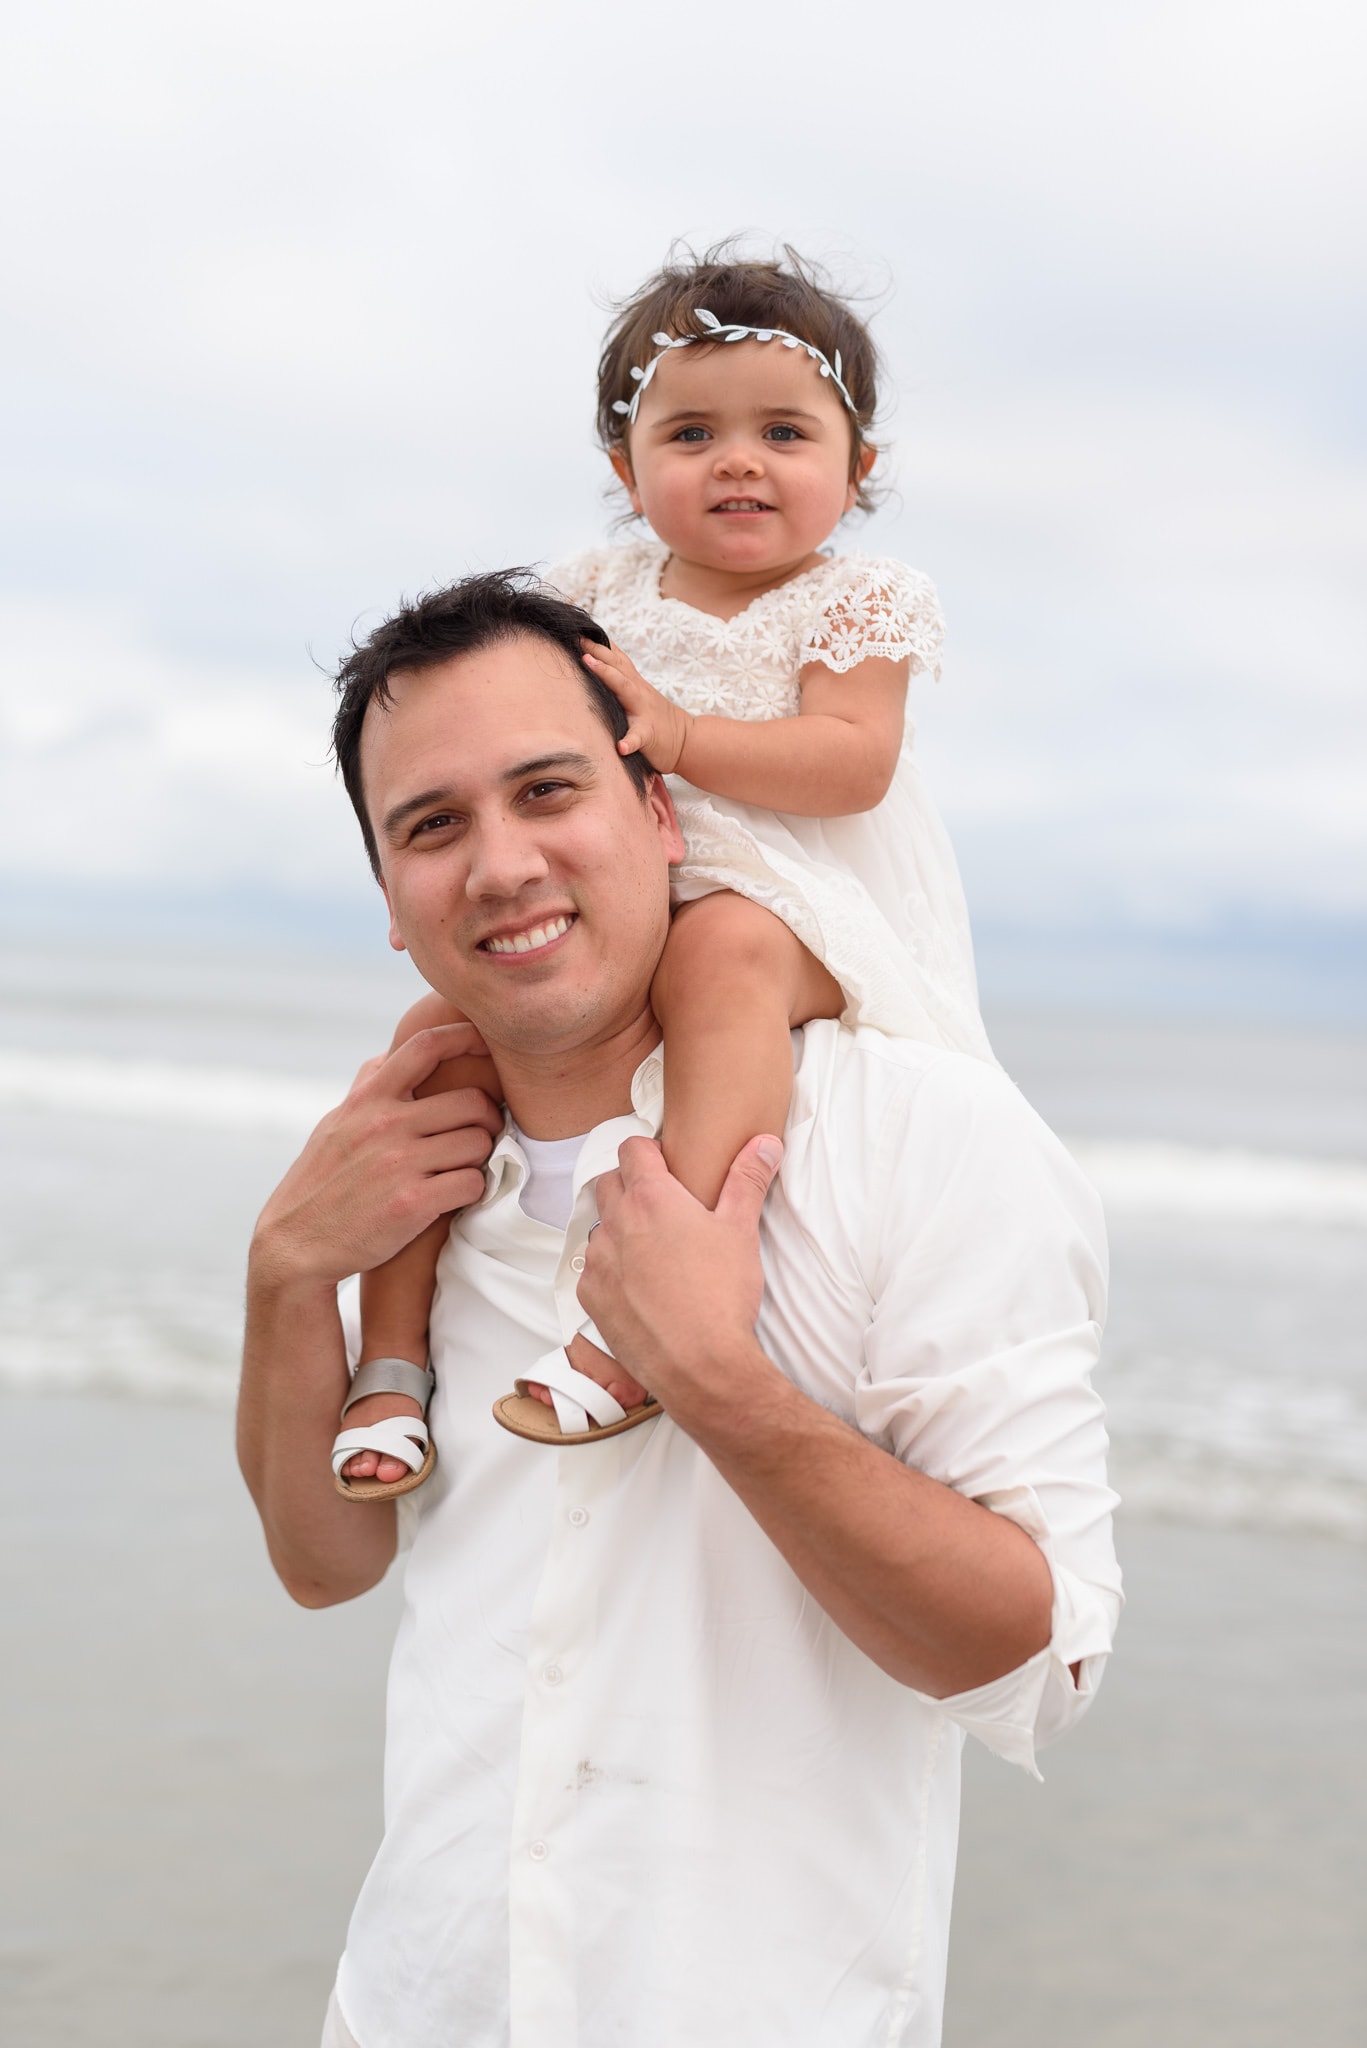 Baby girl on dad's shoulders  - North Beach Plantation